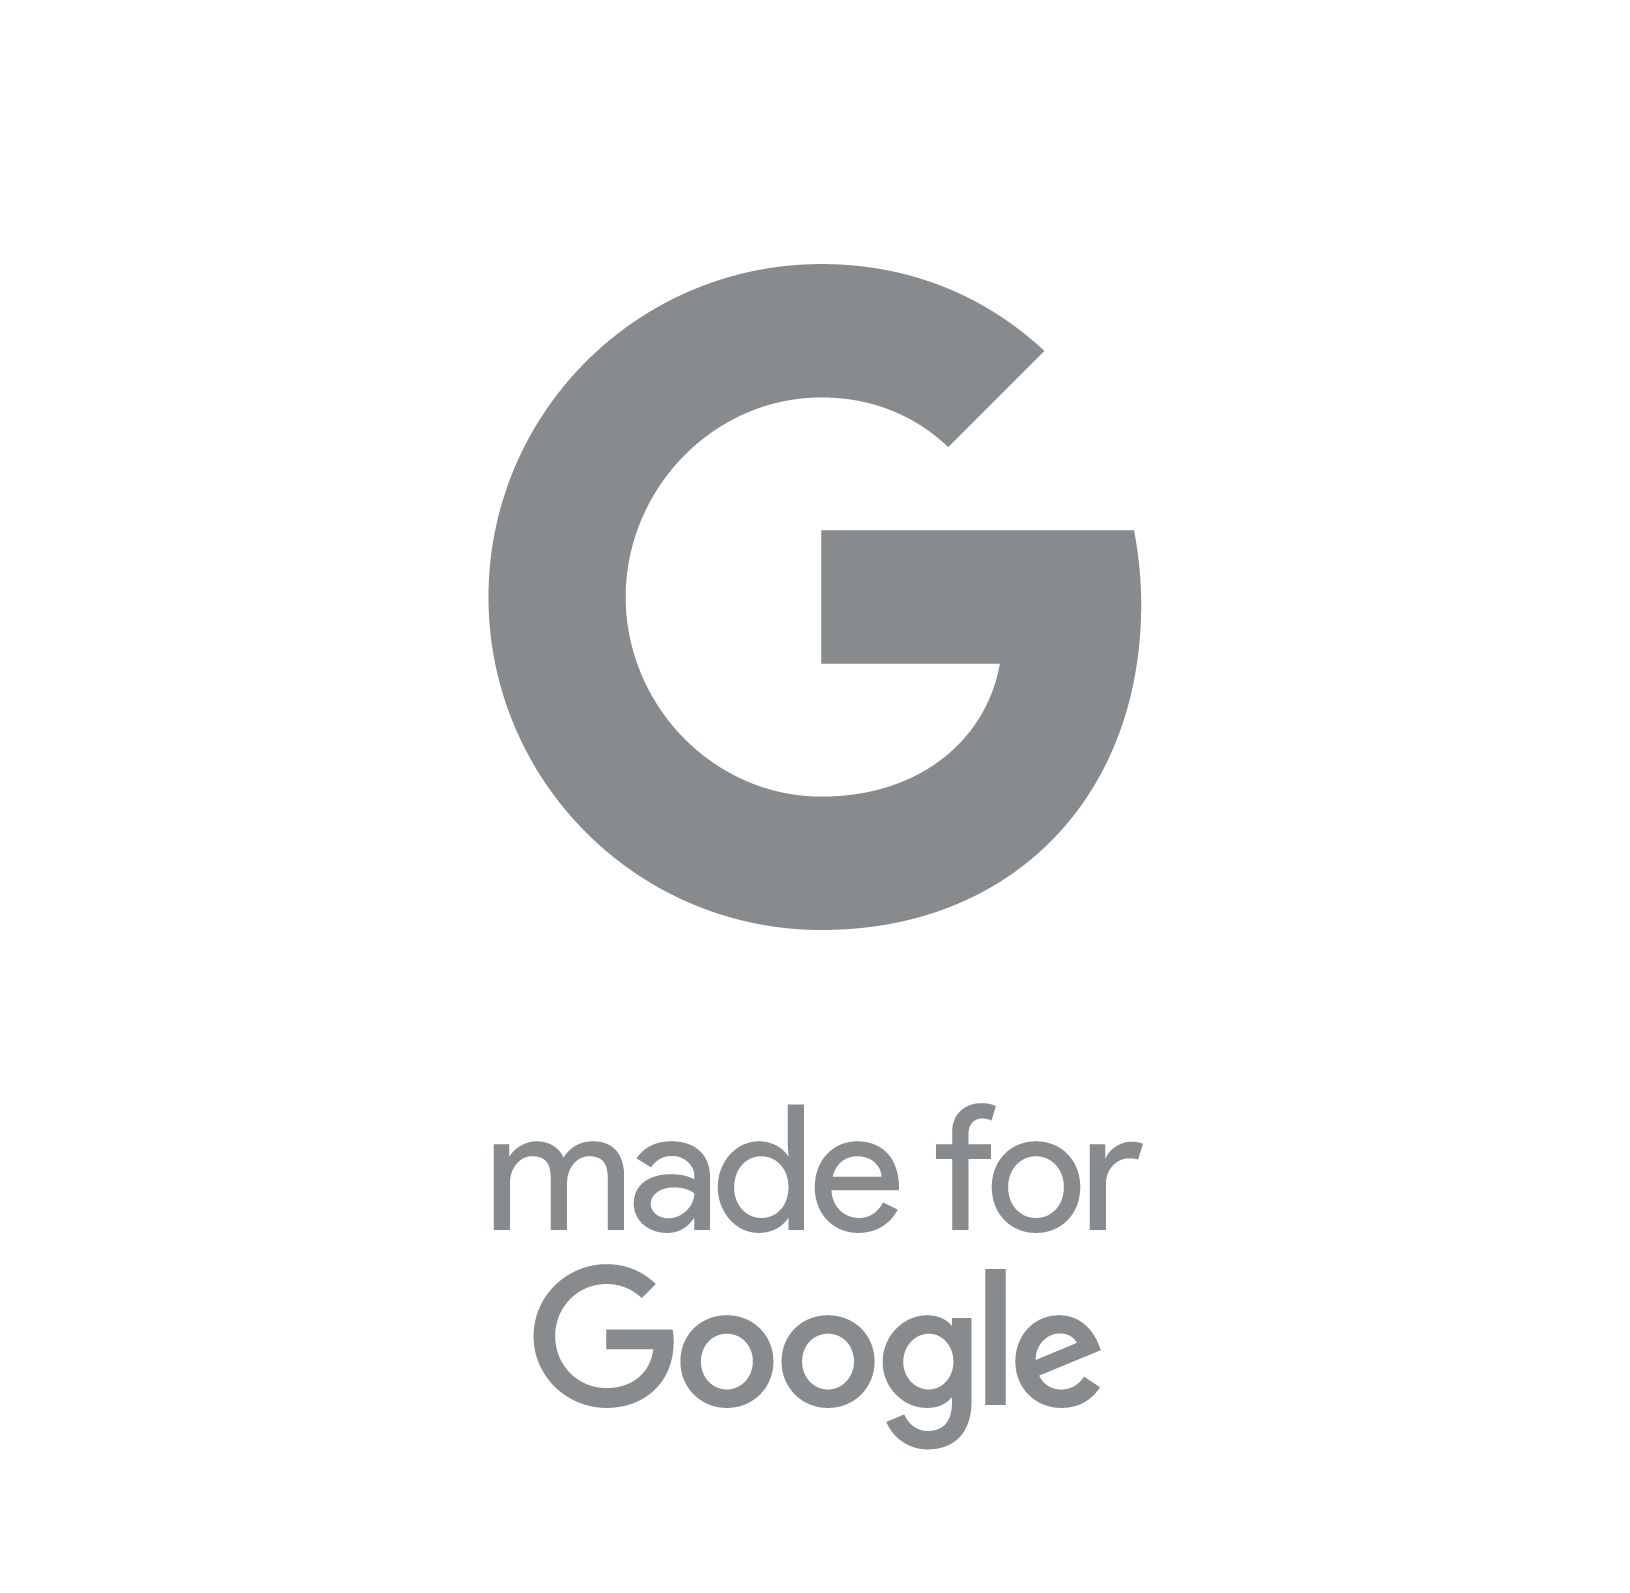 Contact us - Made for Google partner program